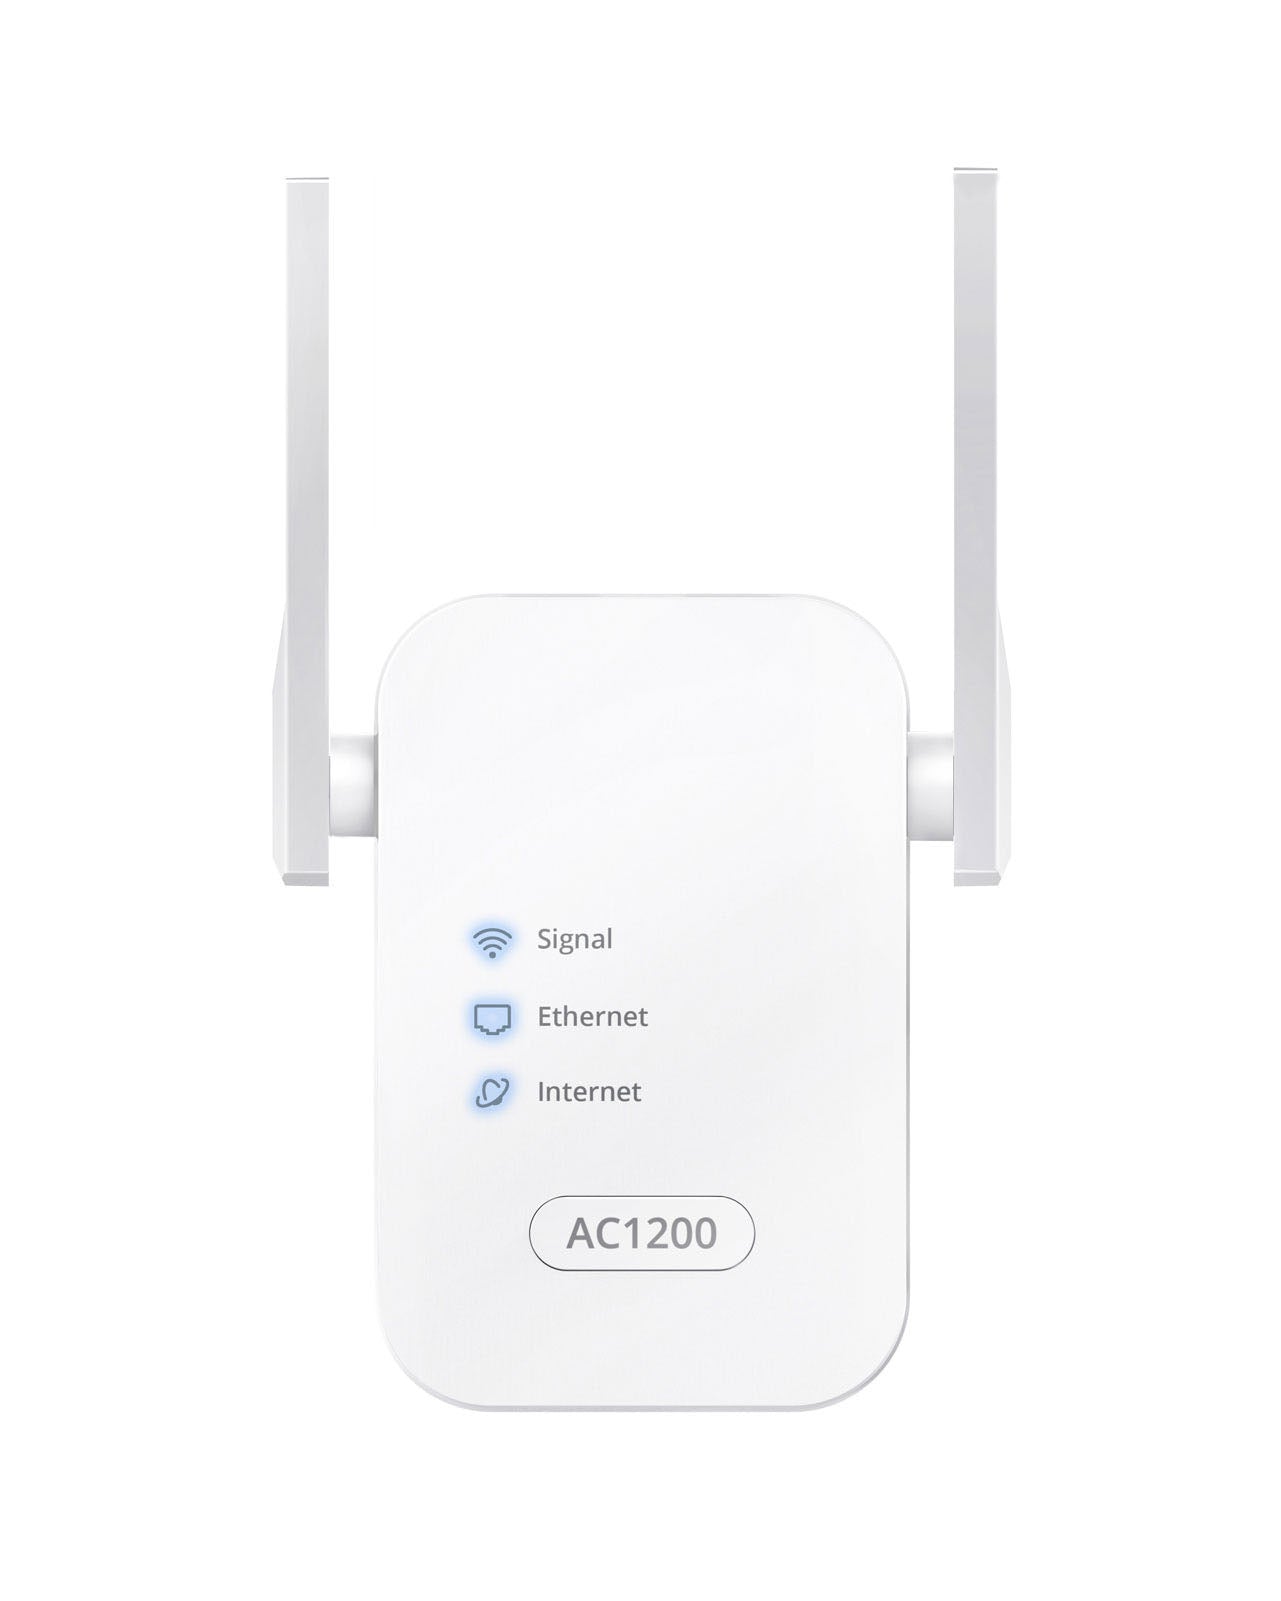 AC1200 WiFi extender